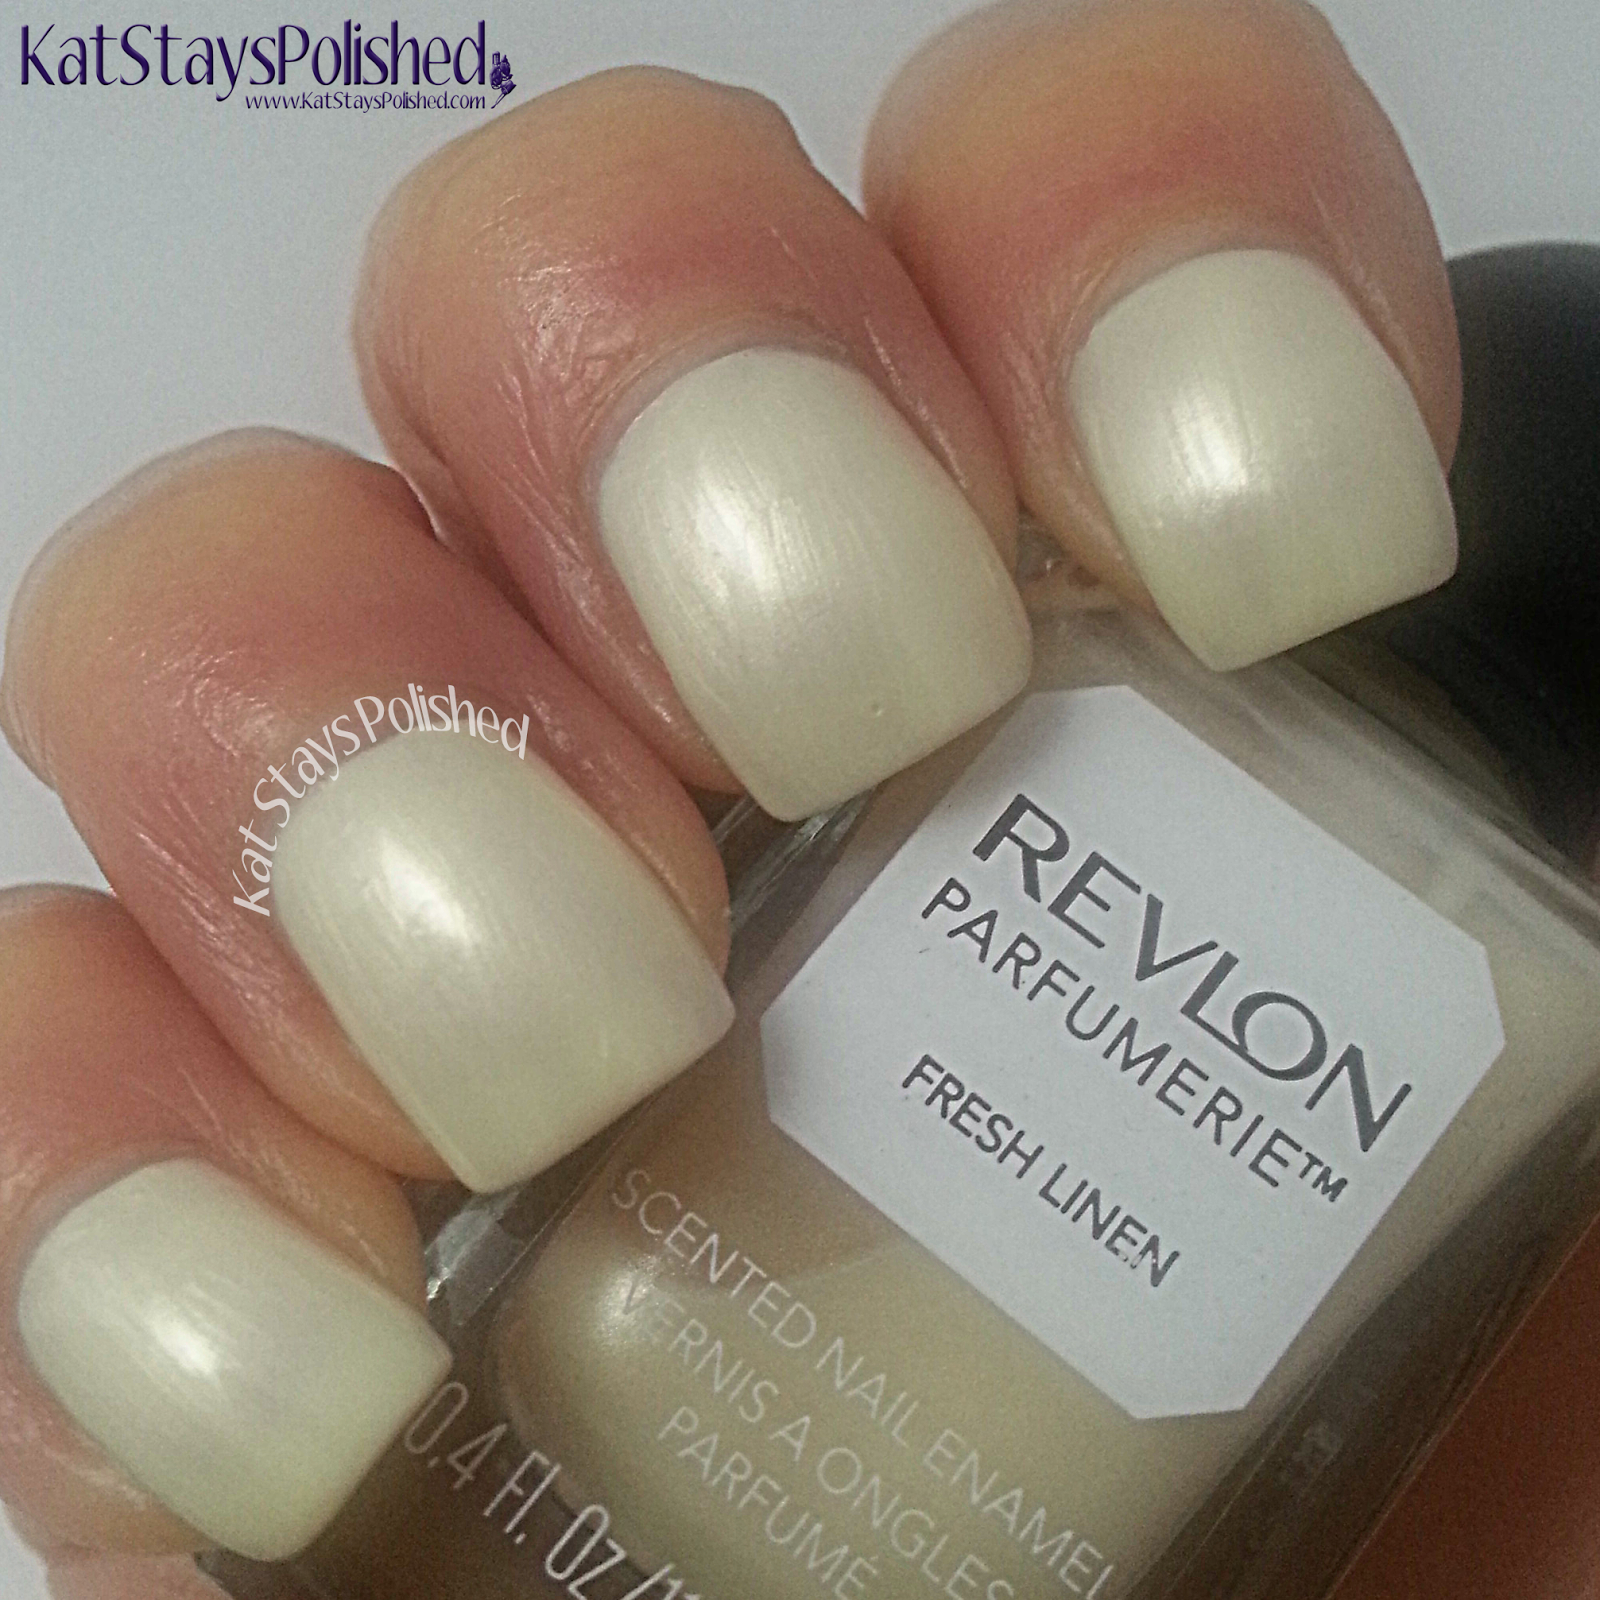 Revlon Parfumerie - Fresh Linen | Kat Stays Polished